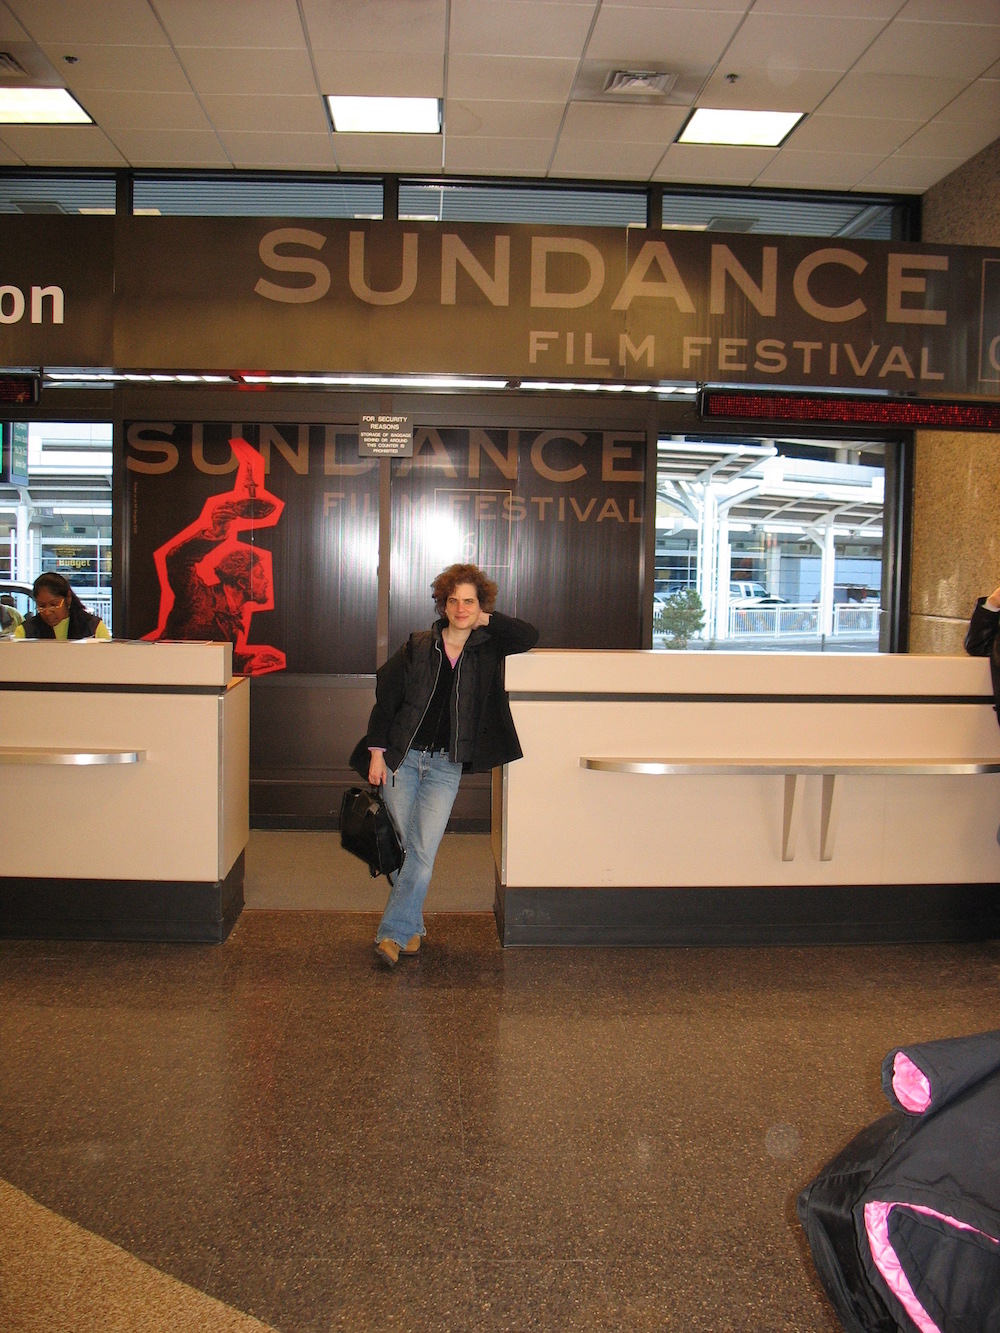  Salt Lake City Airport - awaiting the Sundance Shuttle 